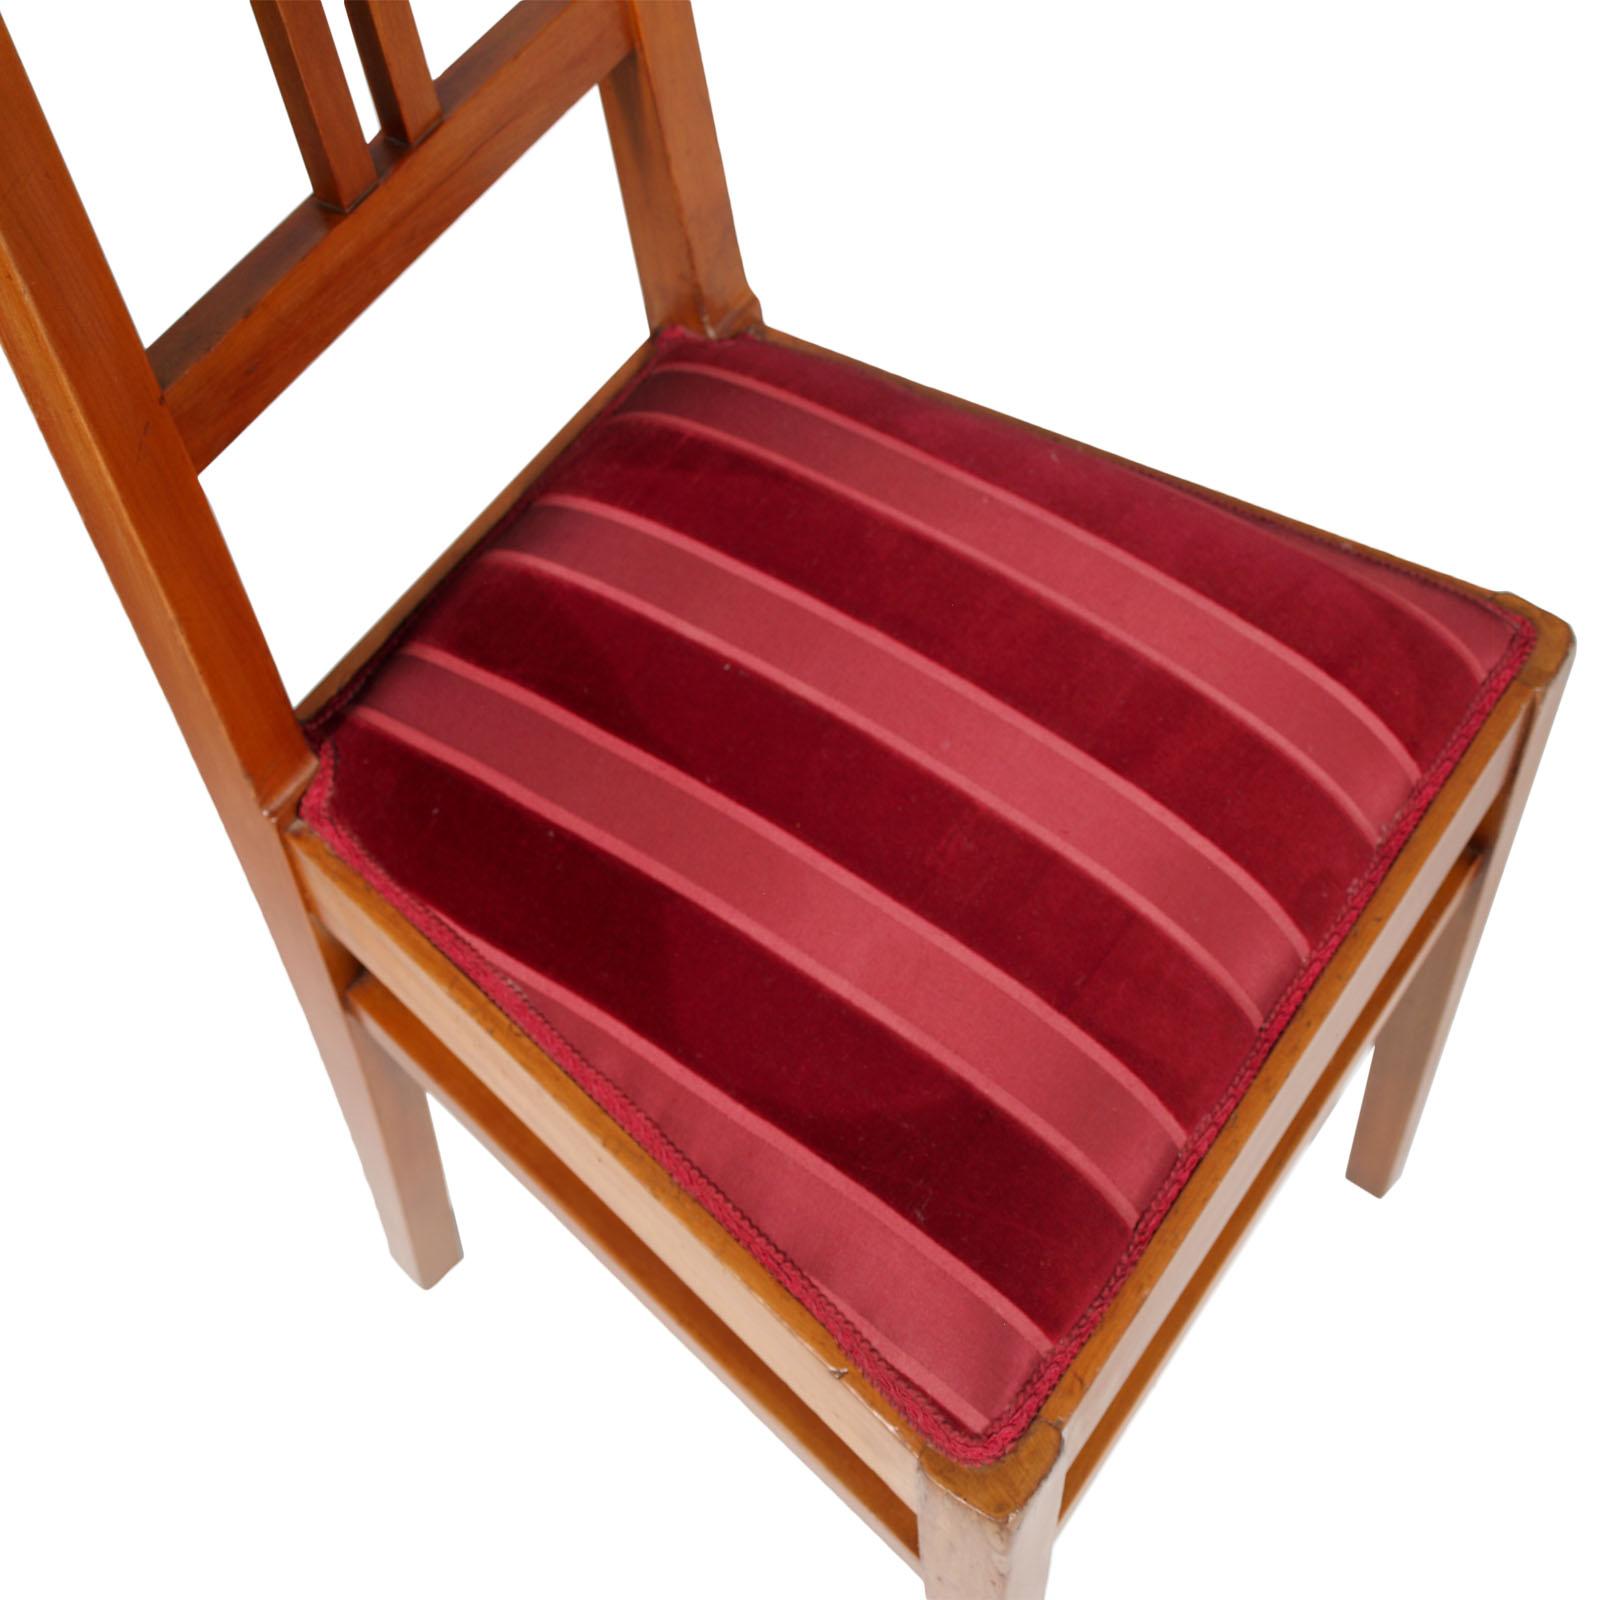 Italian Art Nouveau Side Chairs with Stool, Blond Walnut, Wax-Polished For Sale 1